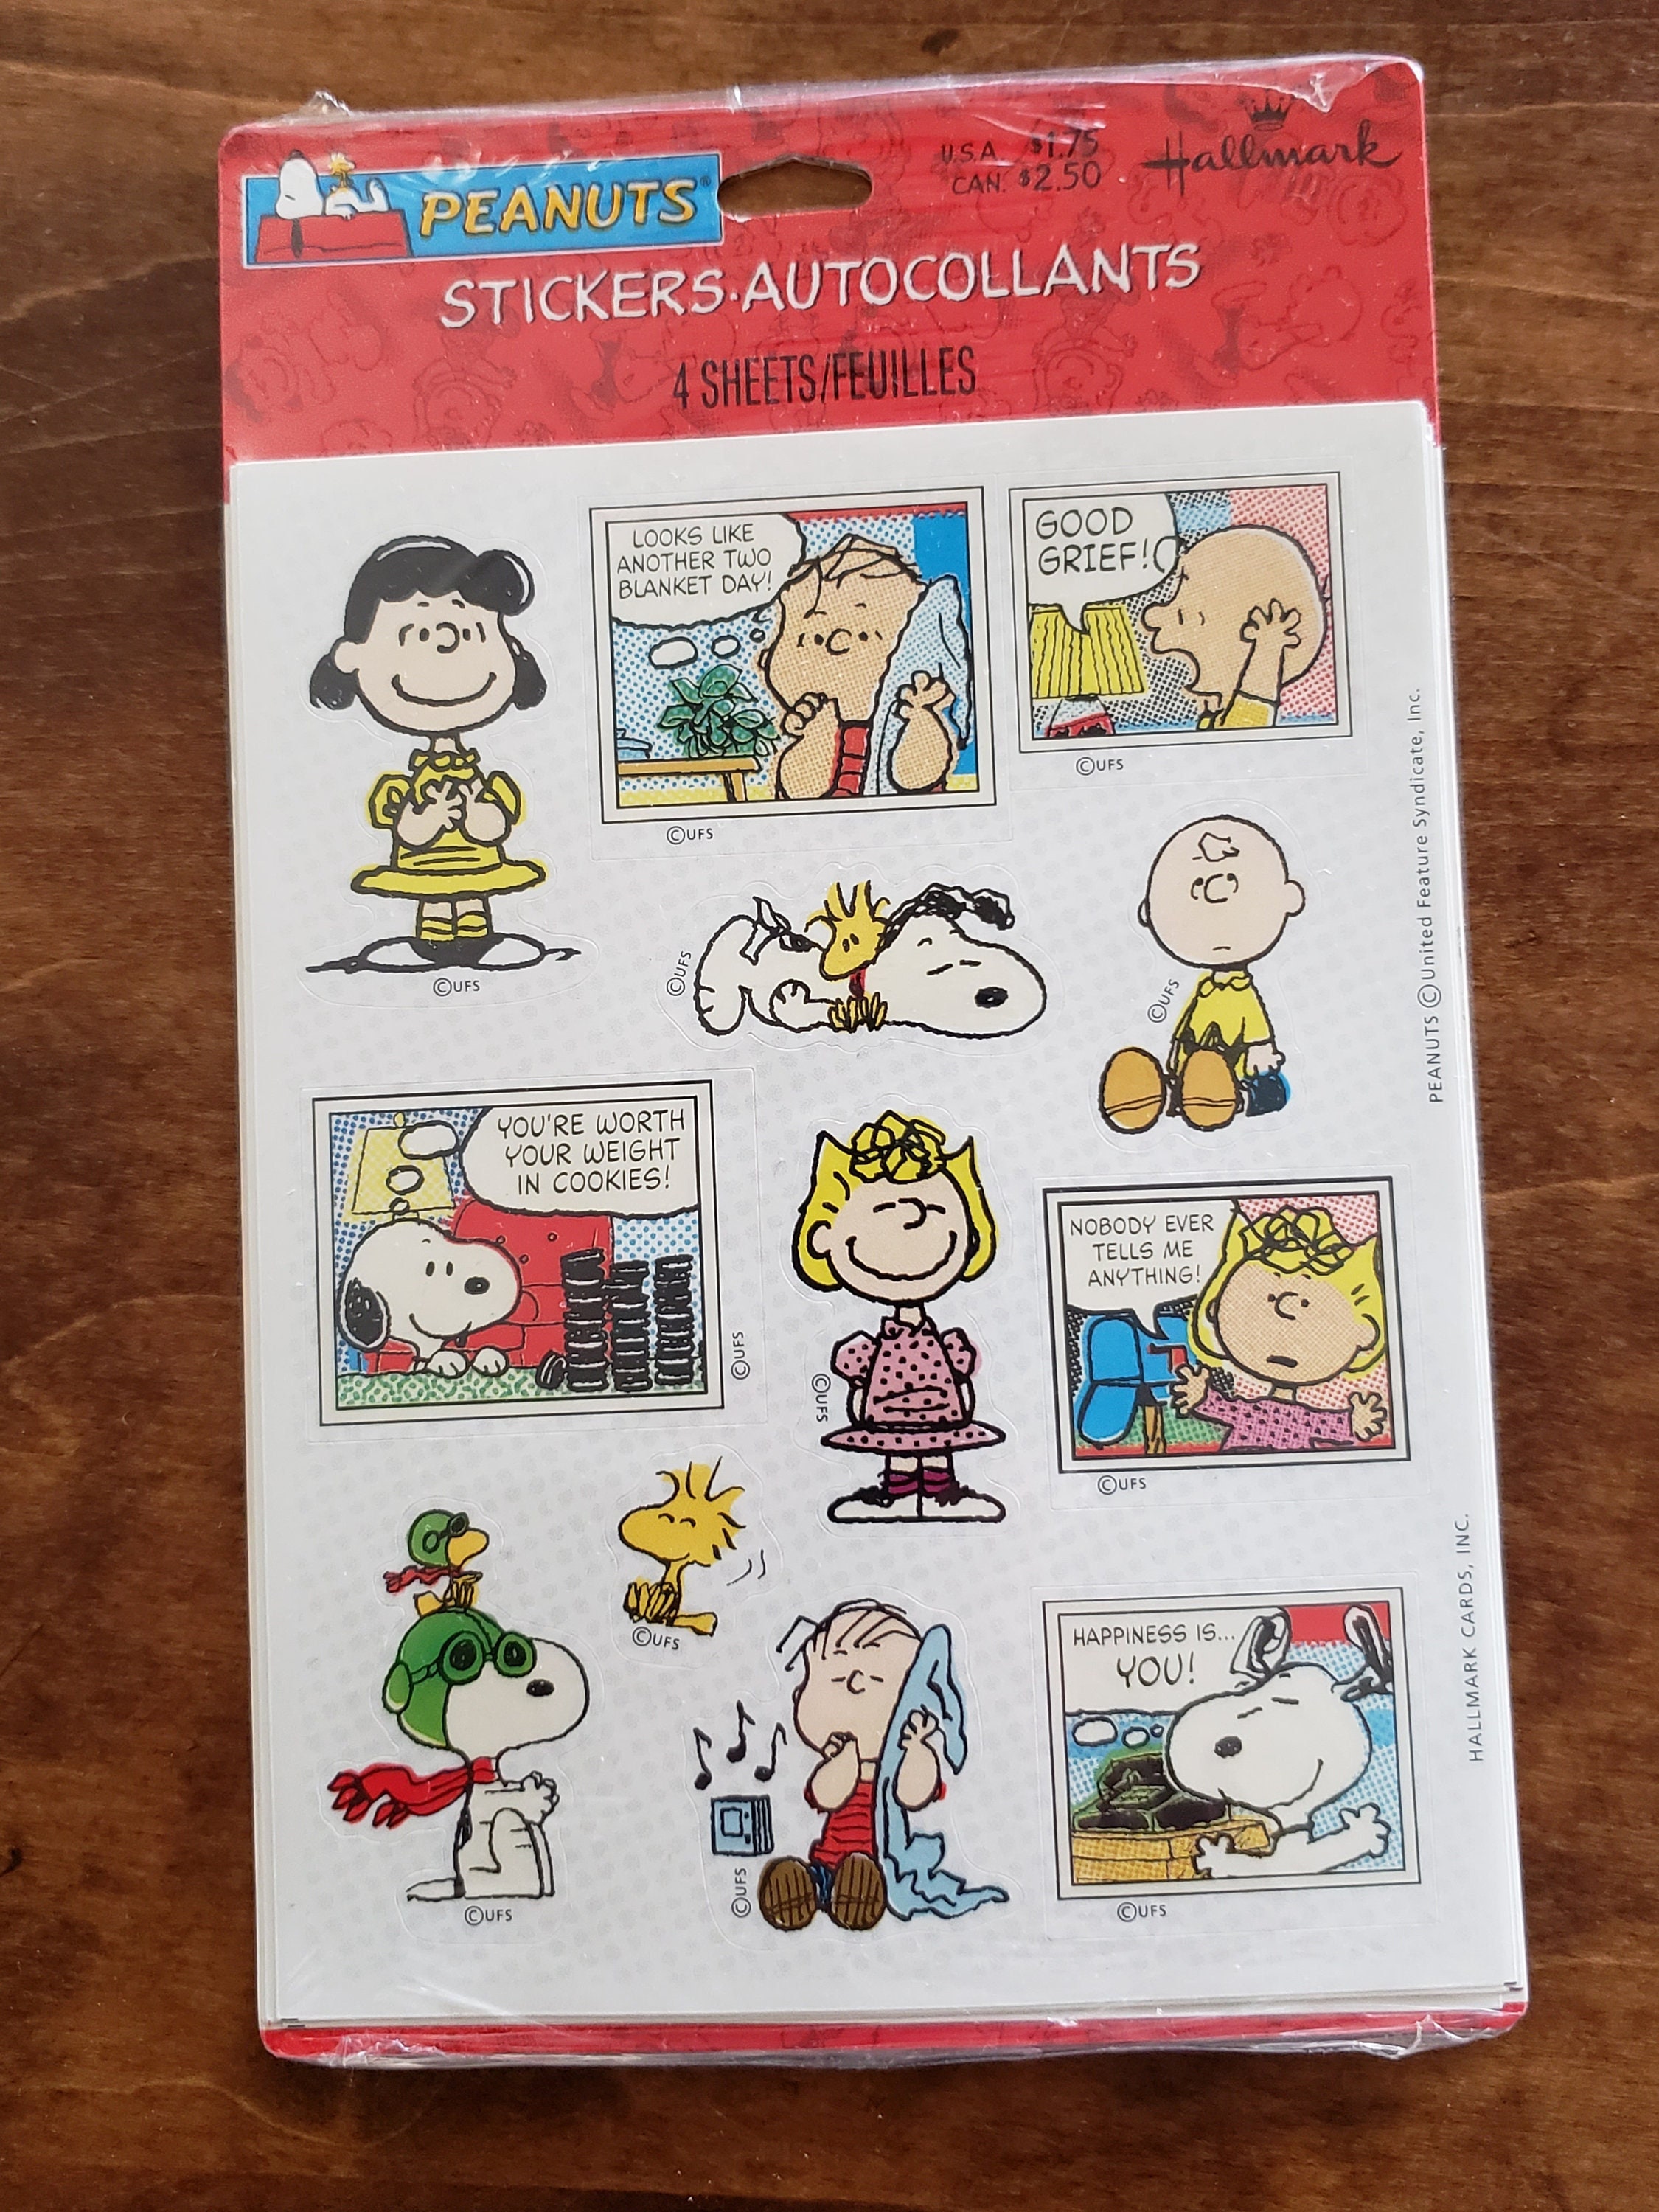 Peanuts Puffy Vinyl 3 Sticker - Snoopy Walking (Great For Scrapbookin